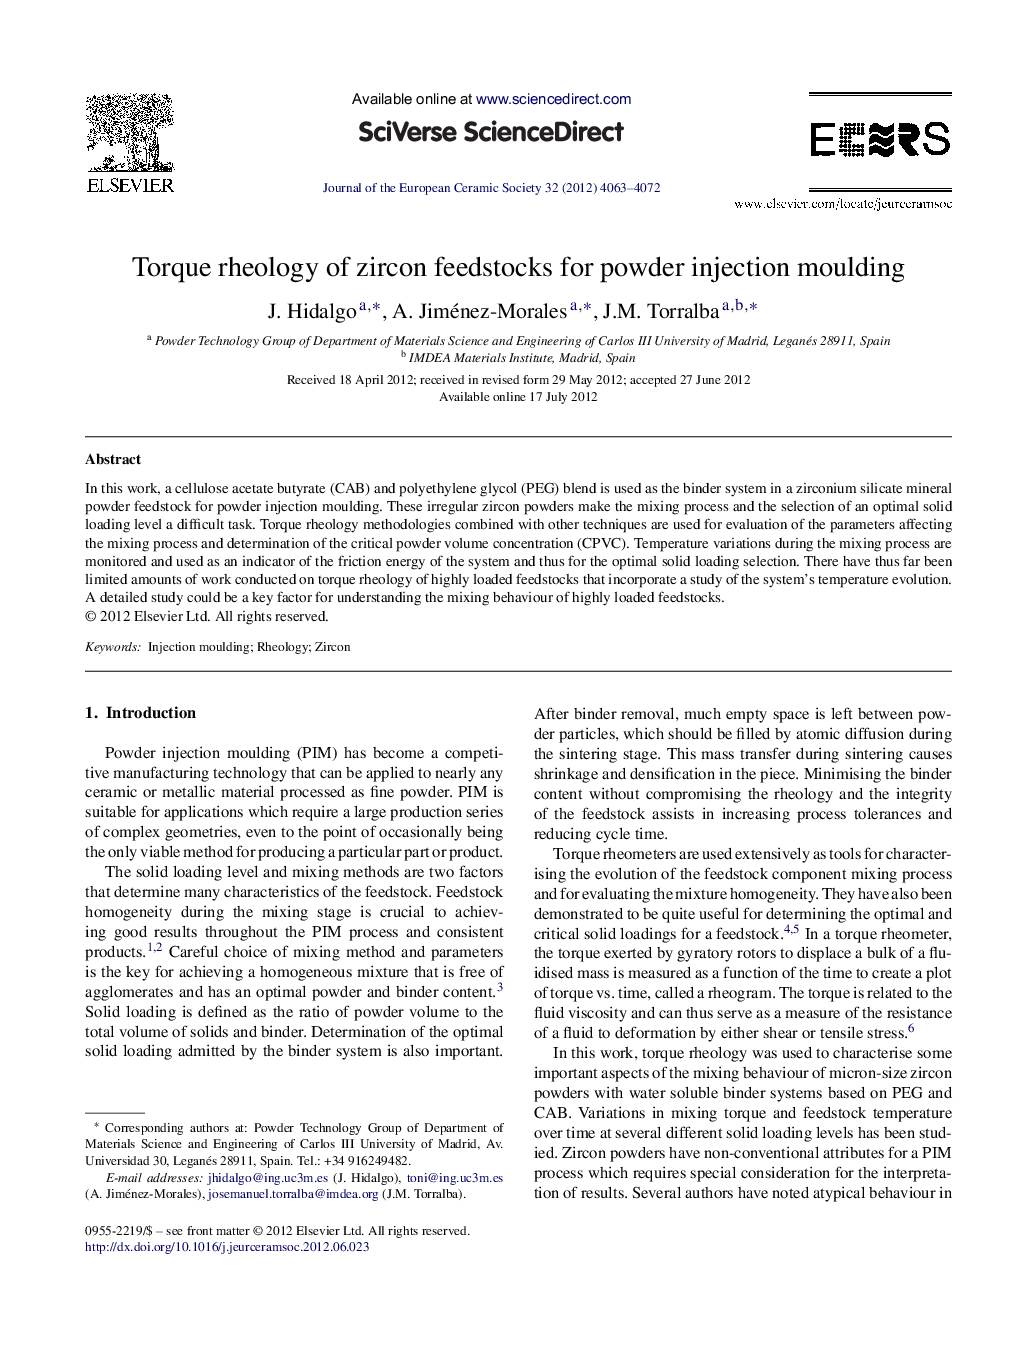 Torque rheology of zircon feedstocks for powder injection moulding